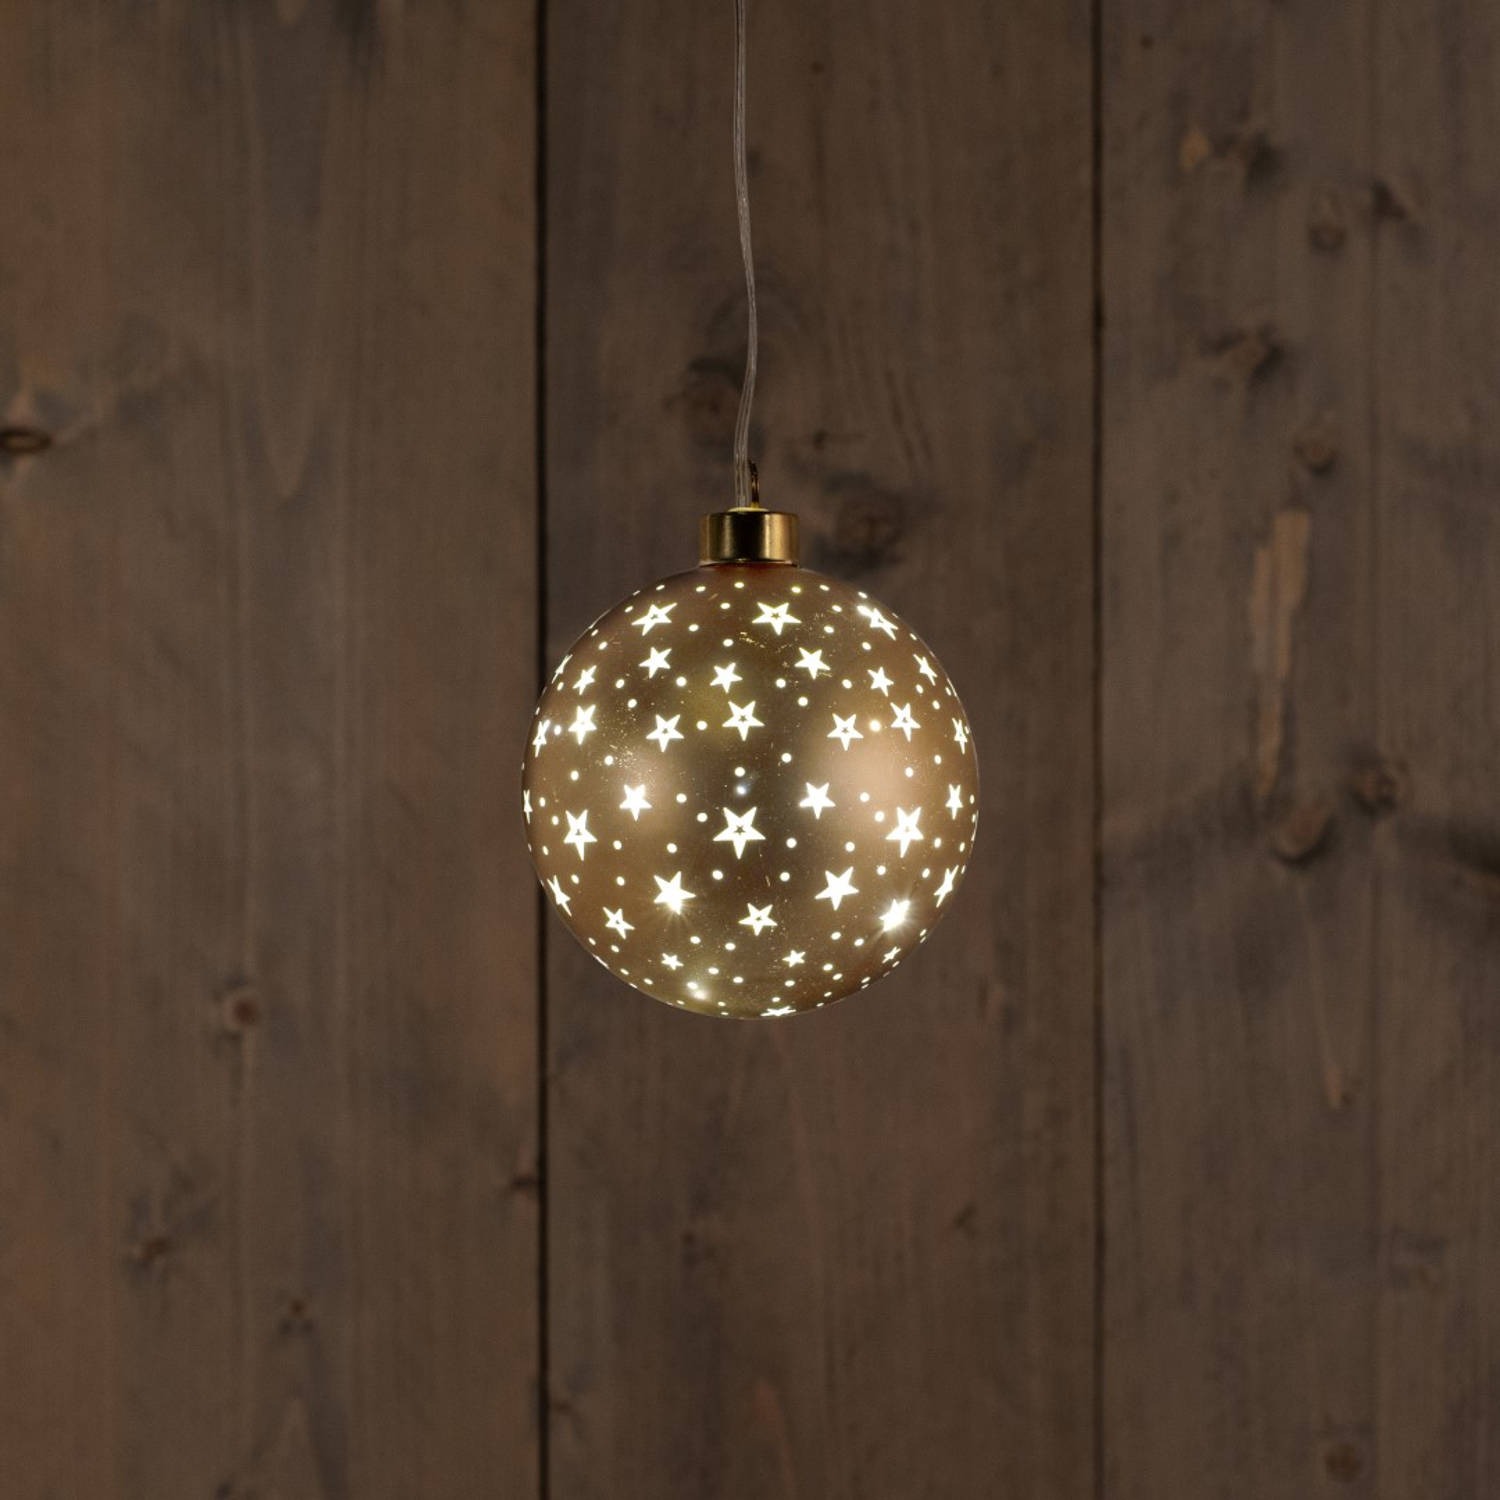 Anna's Collection - Ball Glass Matt Gold With Stars 10Cm / Led Warm White /